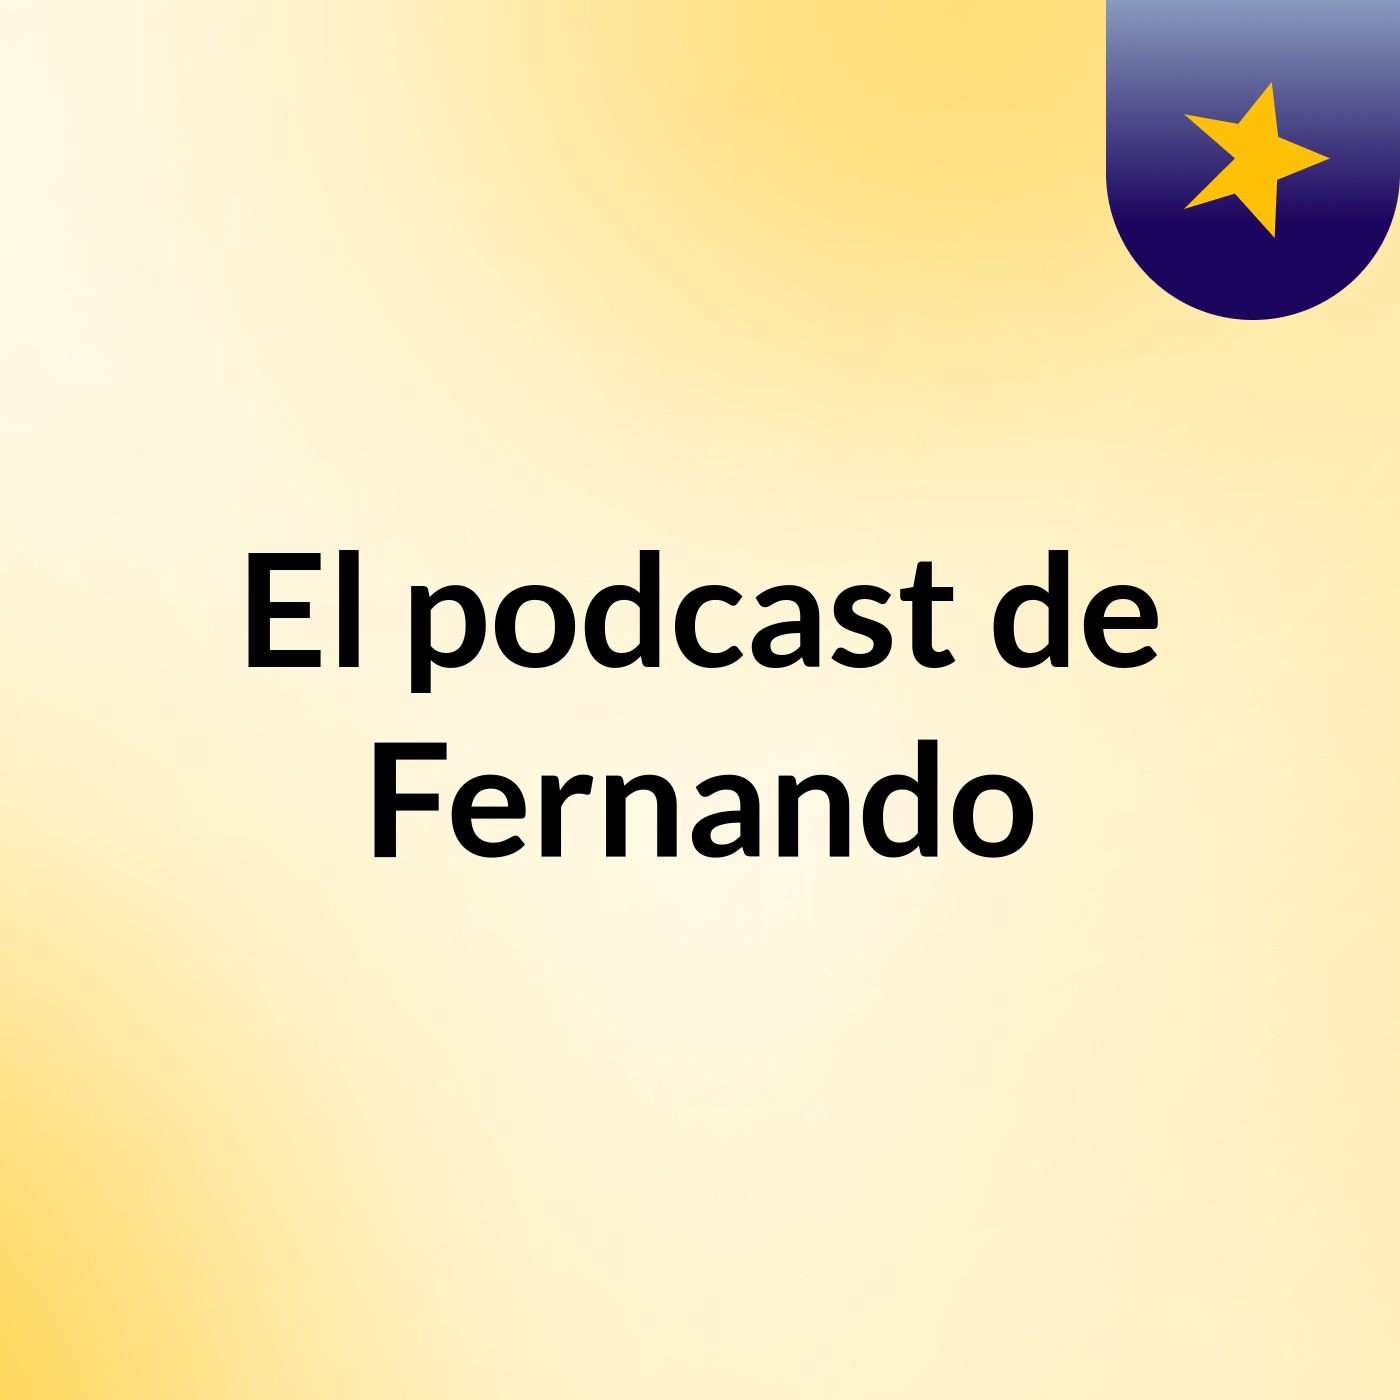 El podcast de Fernando